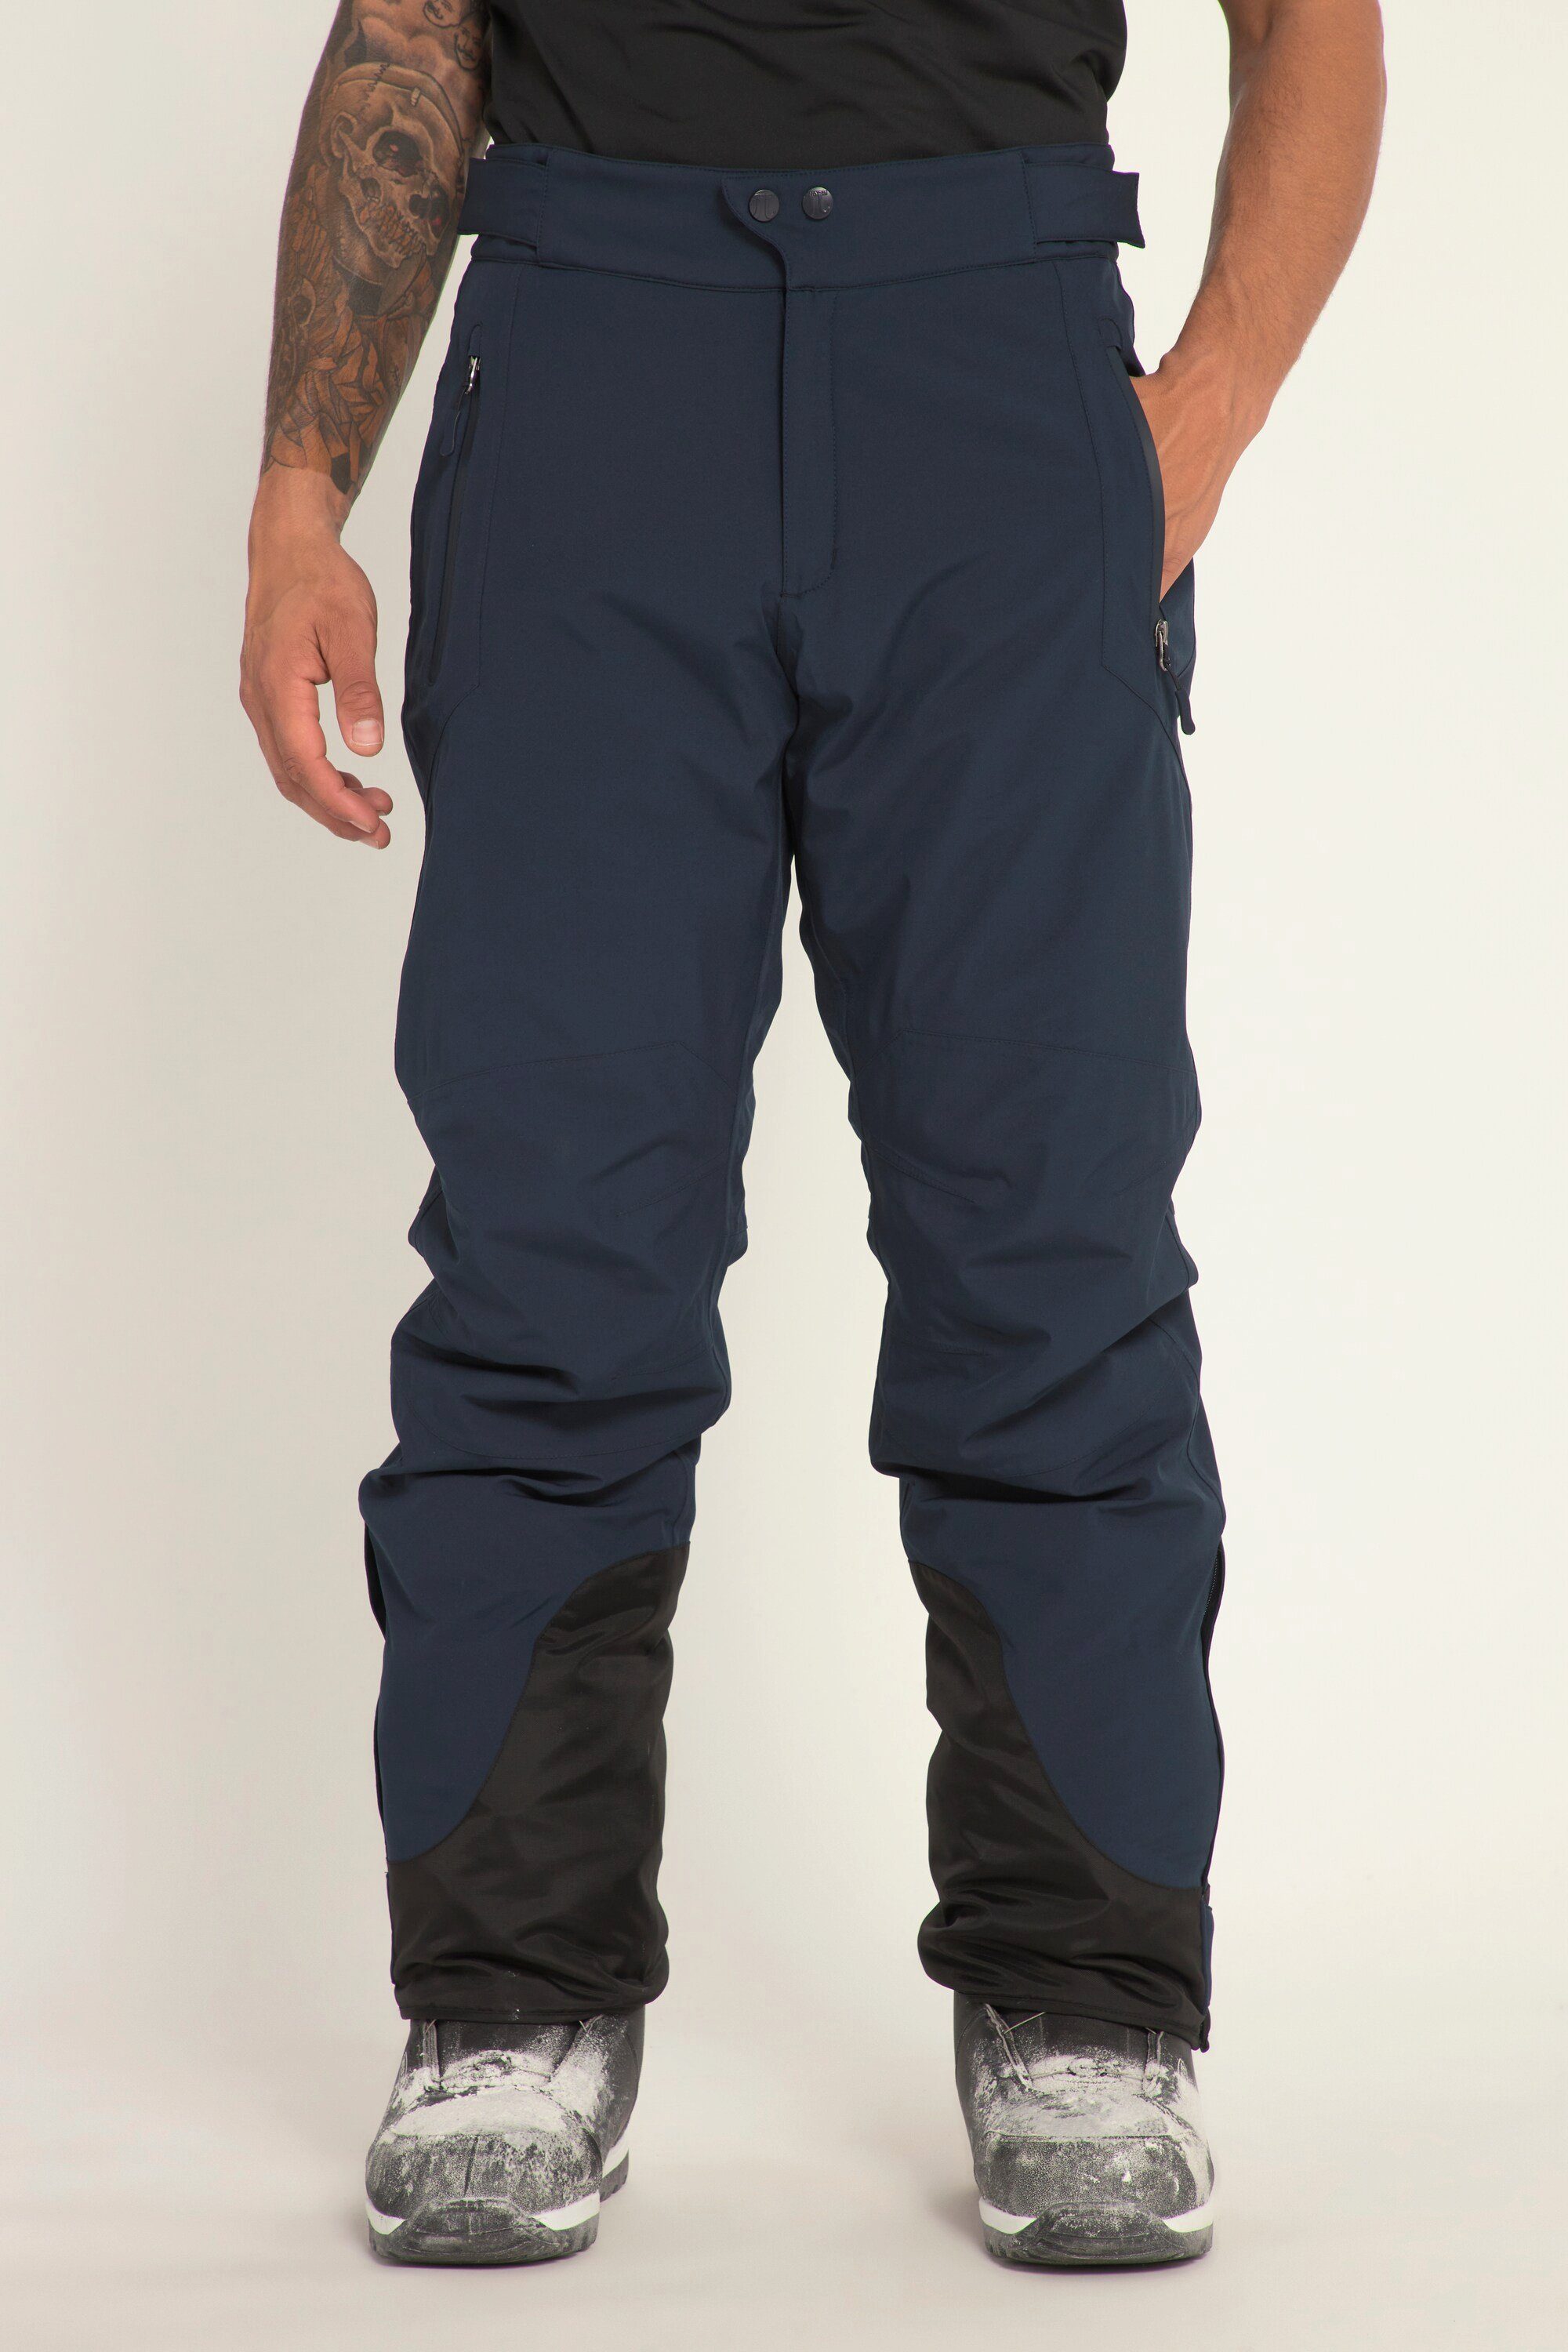 JP1880 Skihose Skihose Skiwear Bauchfit Funktions-Qualität navy blau